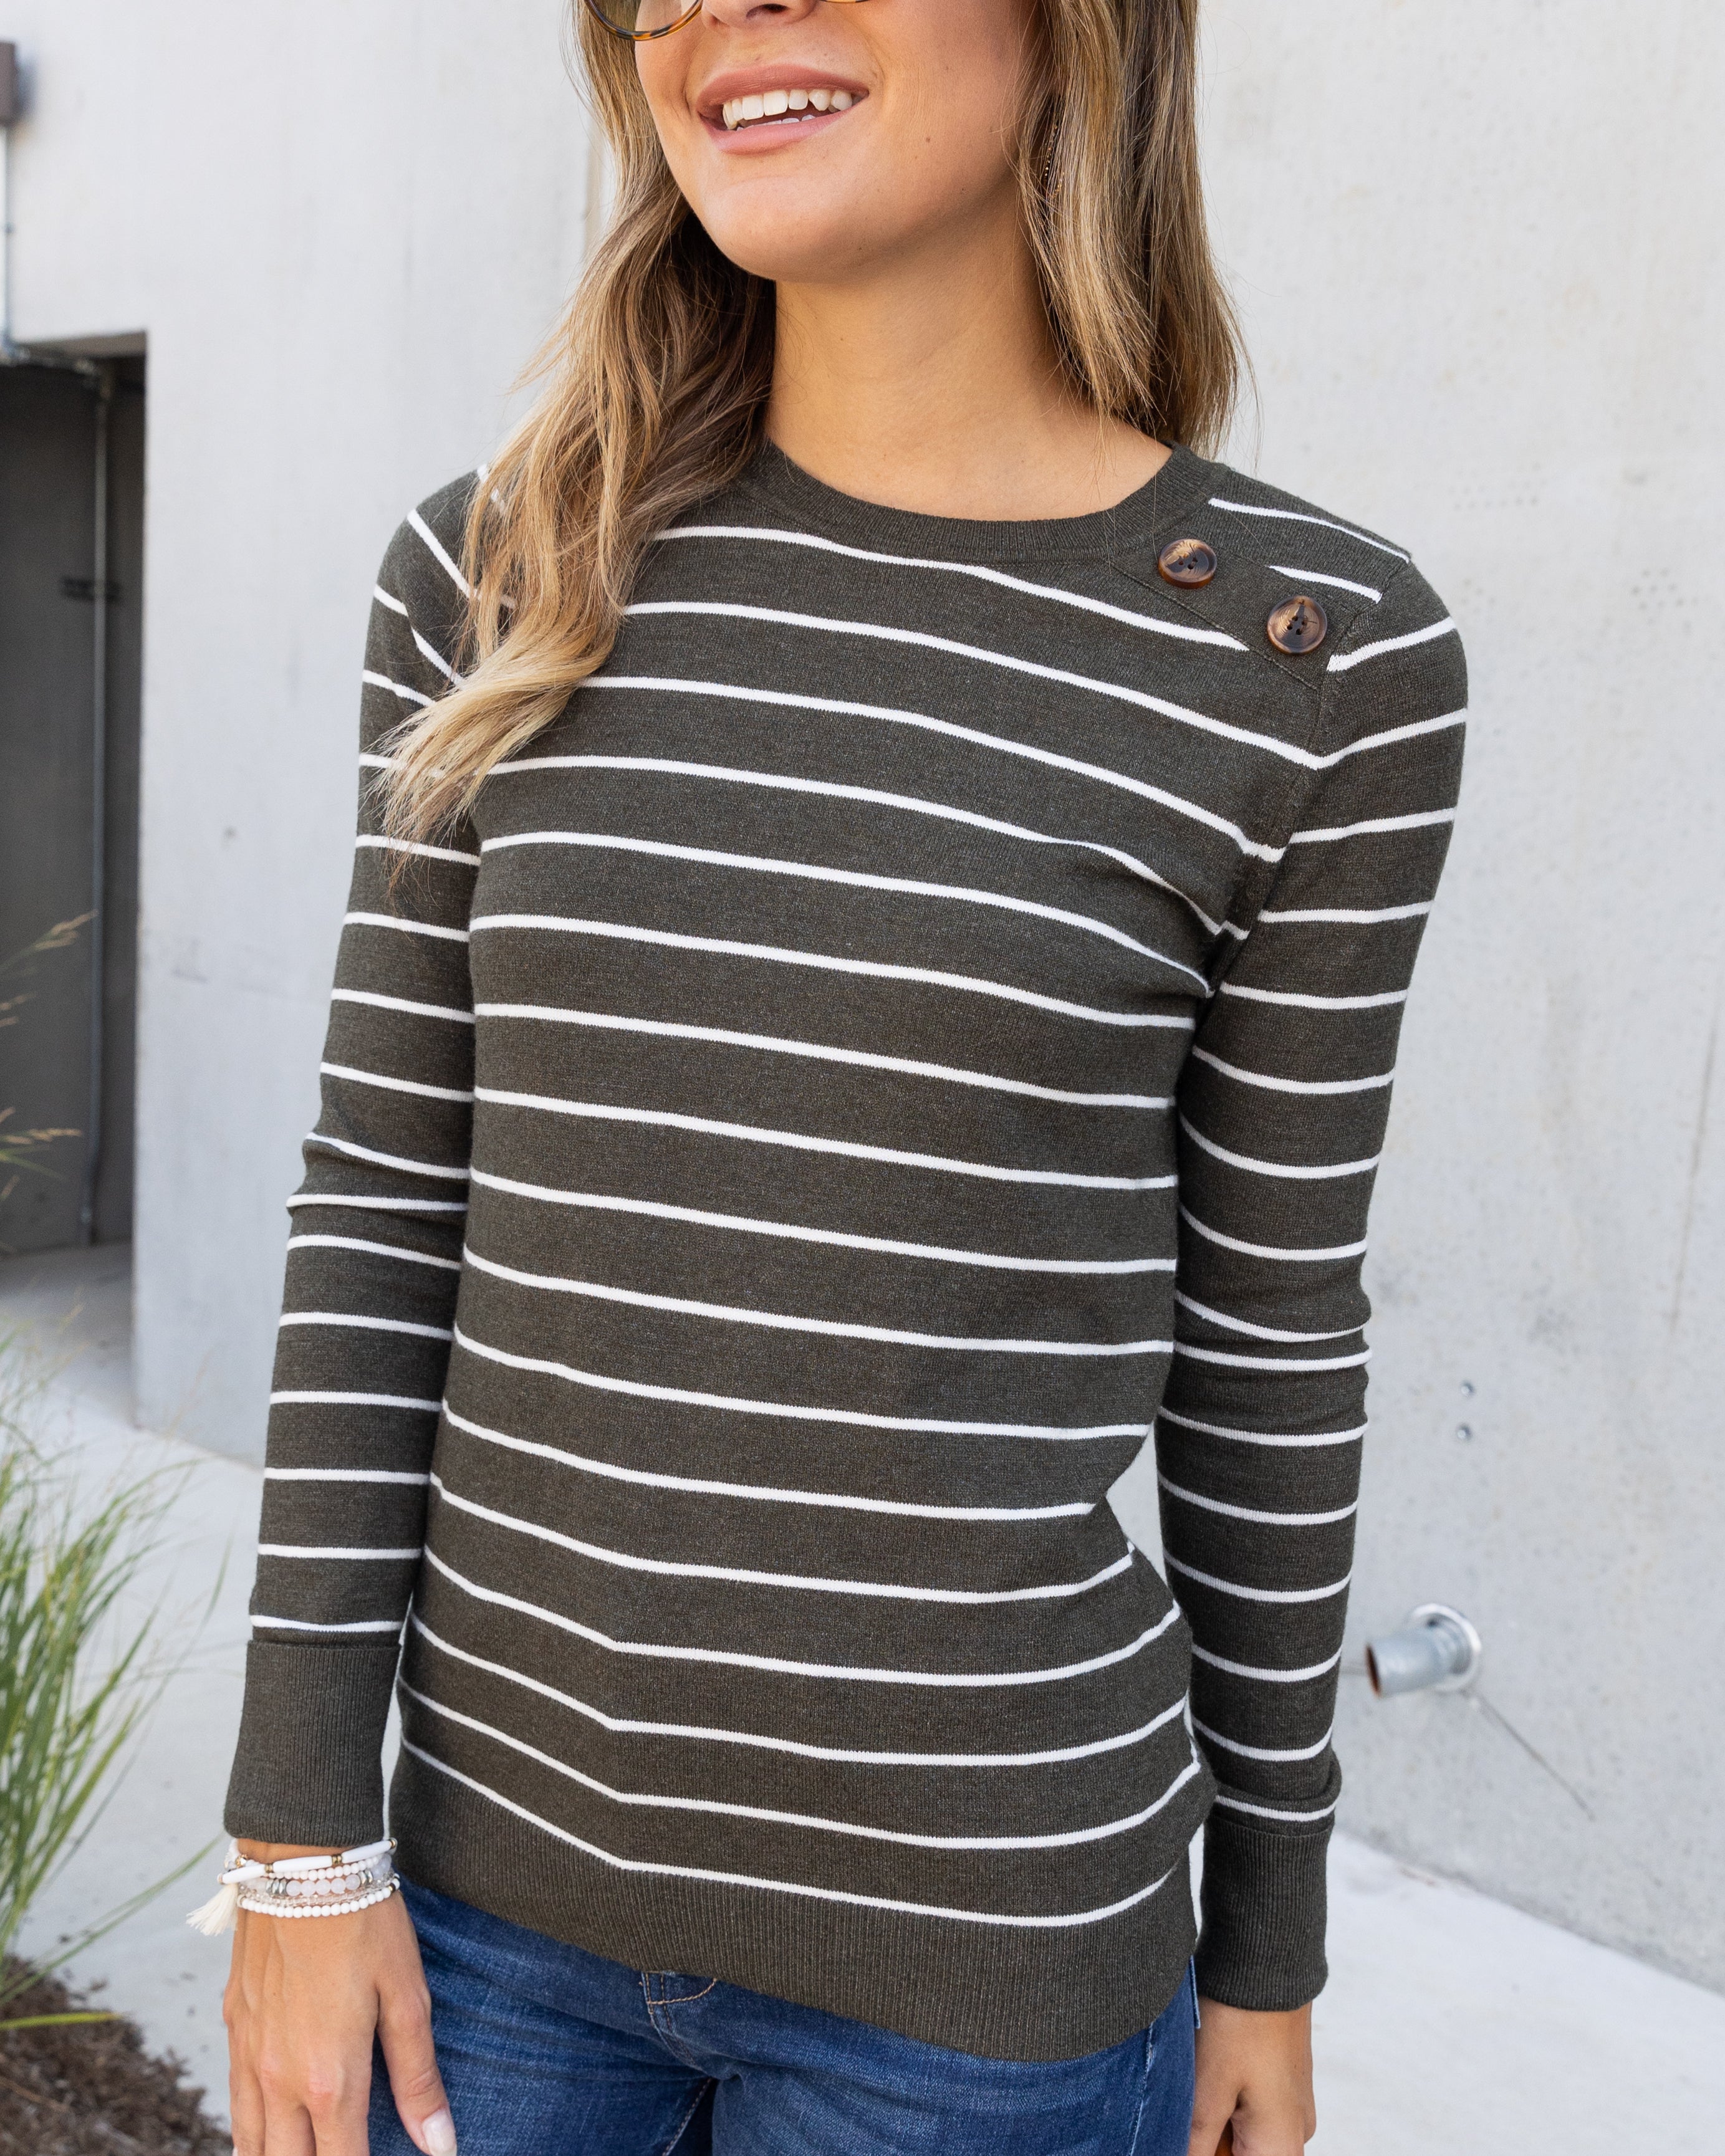 Janie Striped Button Sweater - Olive